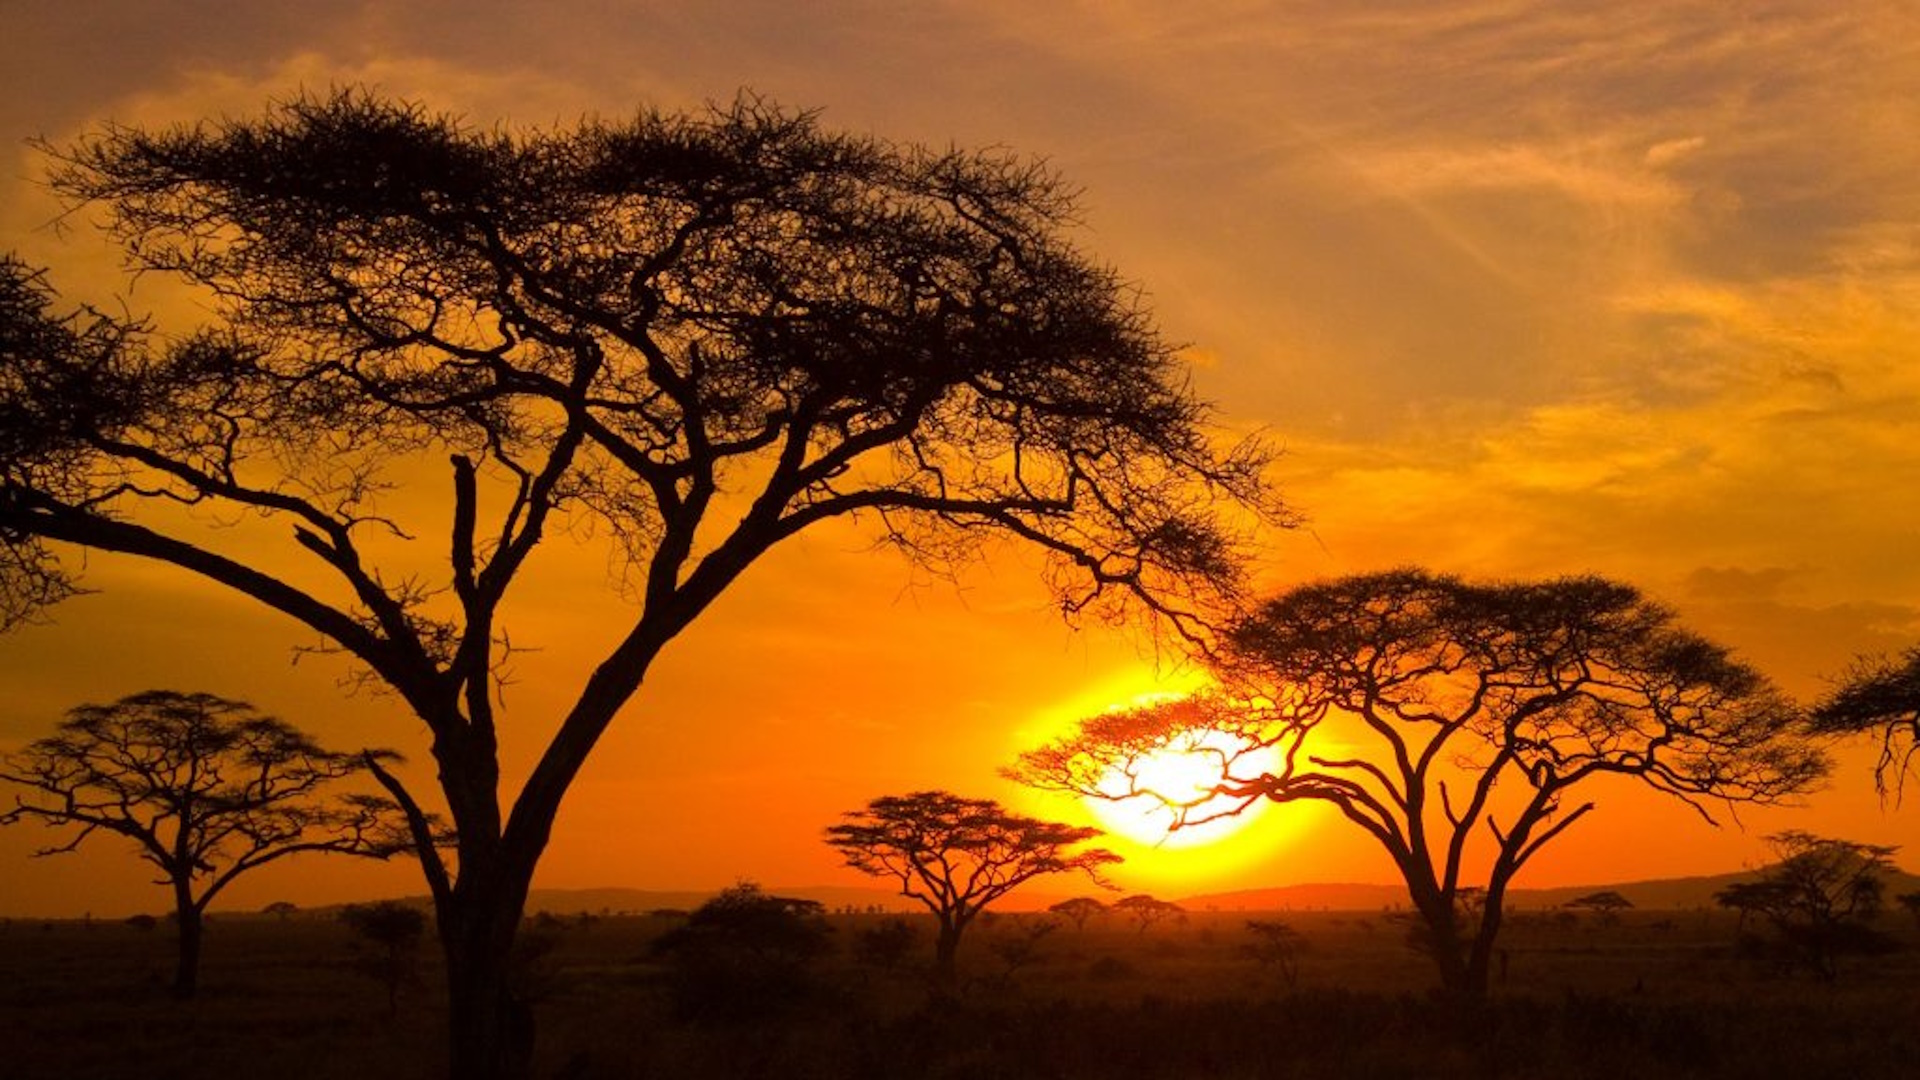 The Serengeti, Tanzania beautiful places